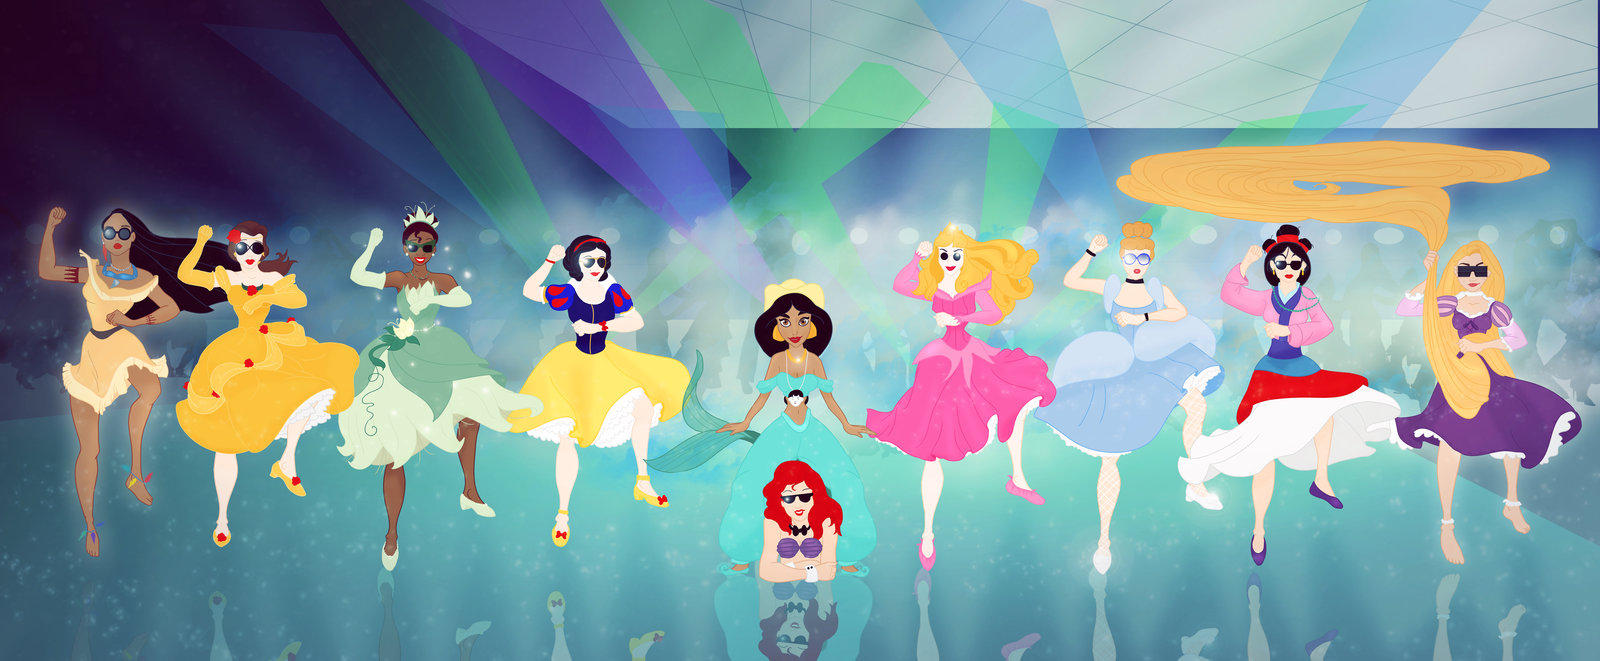 Disney Princess Gangnam Style - Childhood Animated Movie Heroines Fan Art  (33233840) - Fanpop